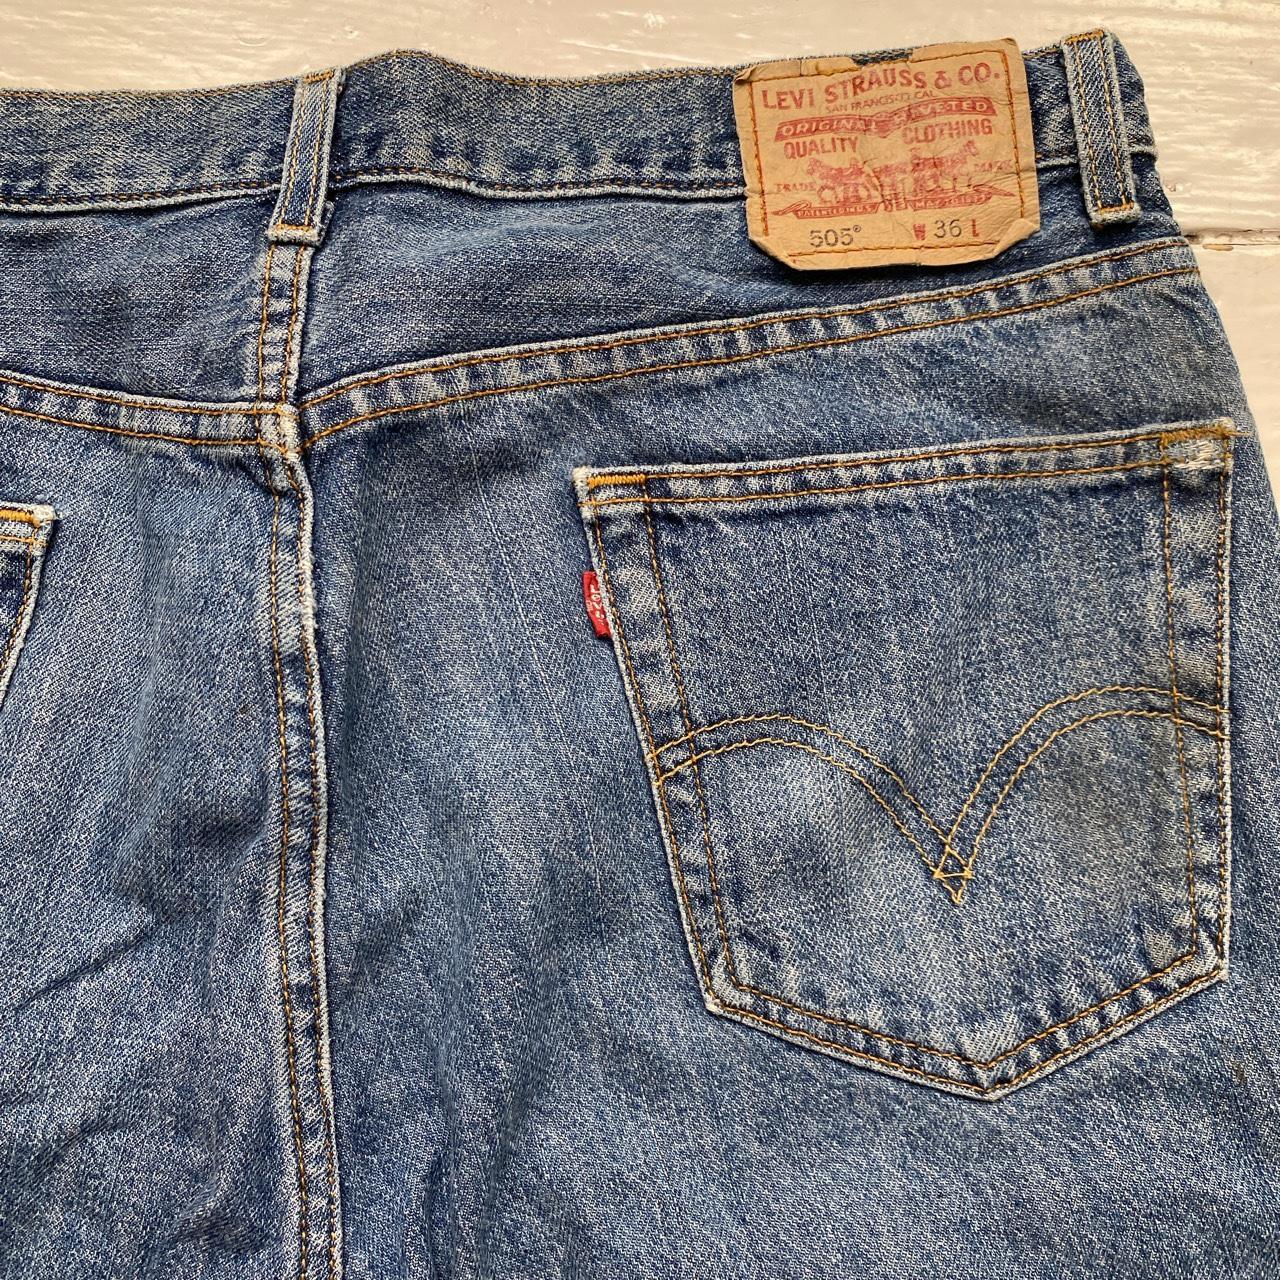 Levis 505 Baggy Vintage Navy Jean Short Jorts